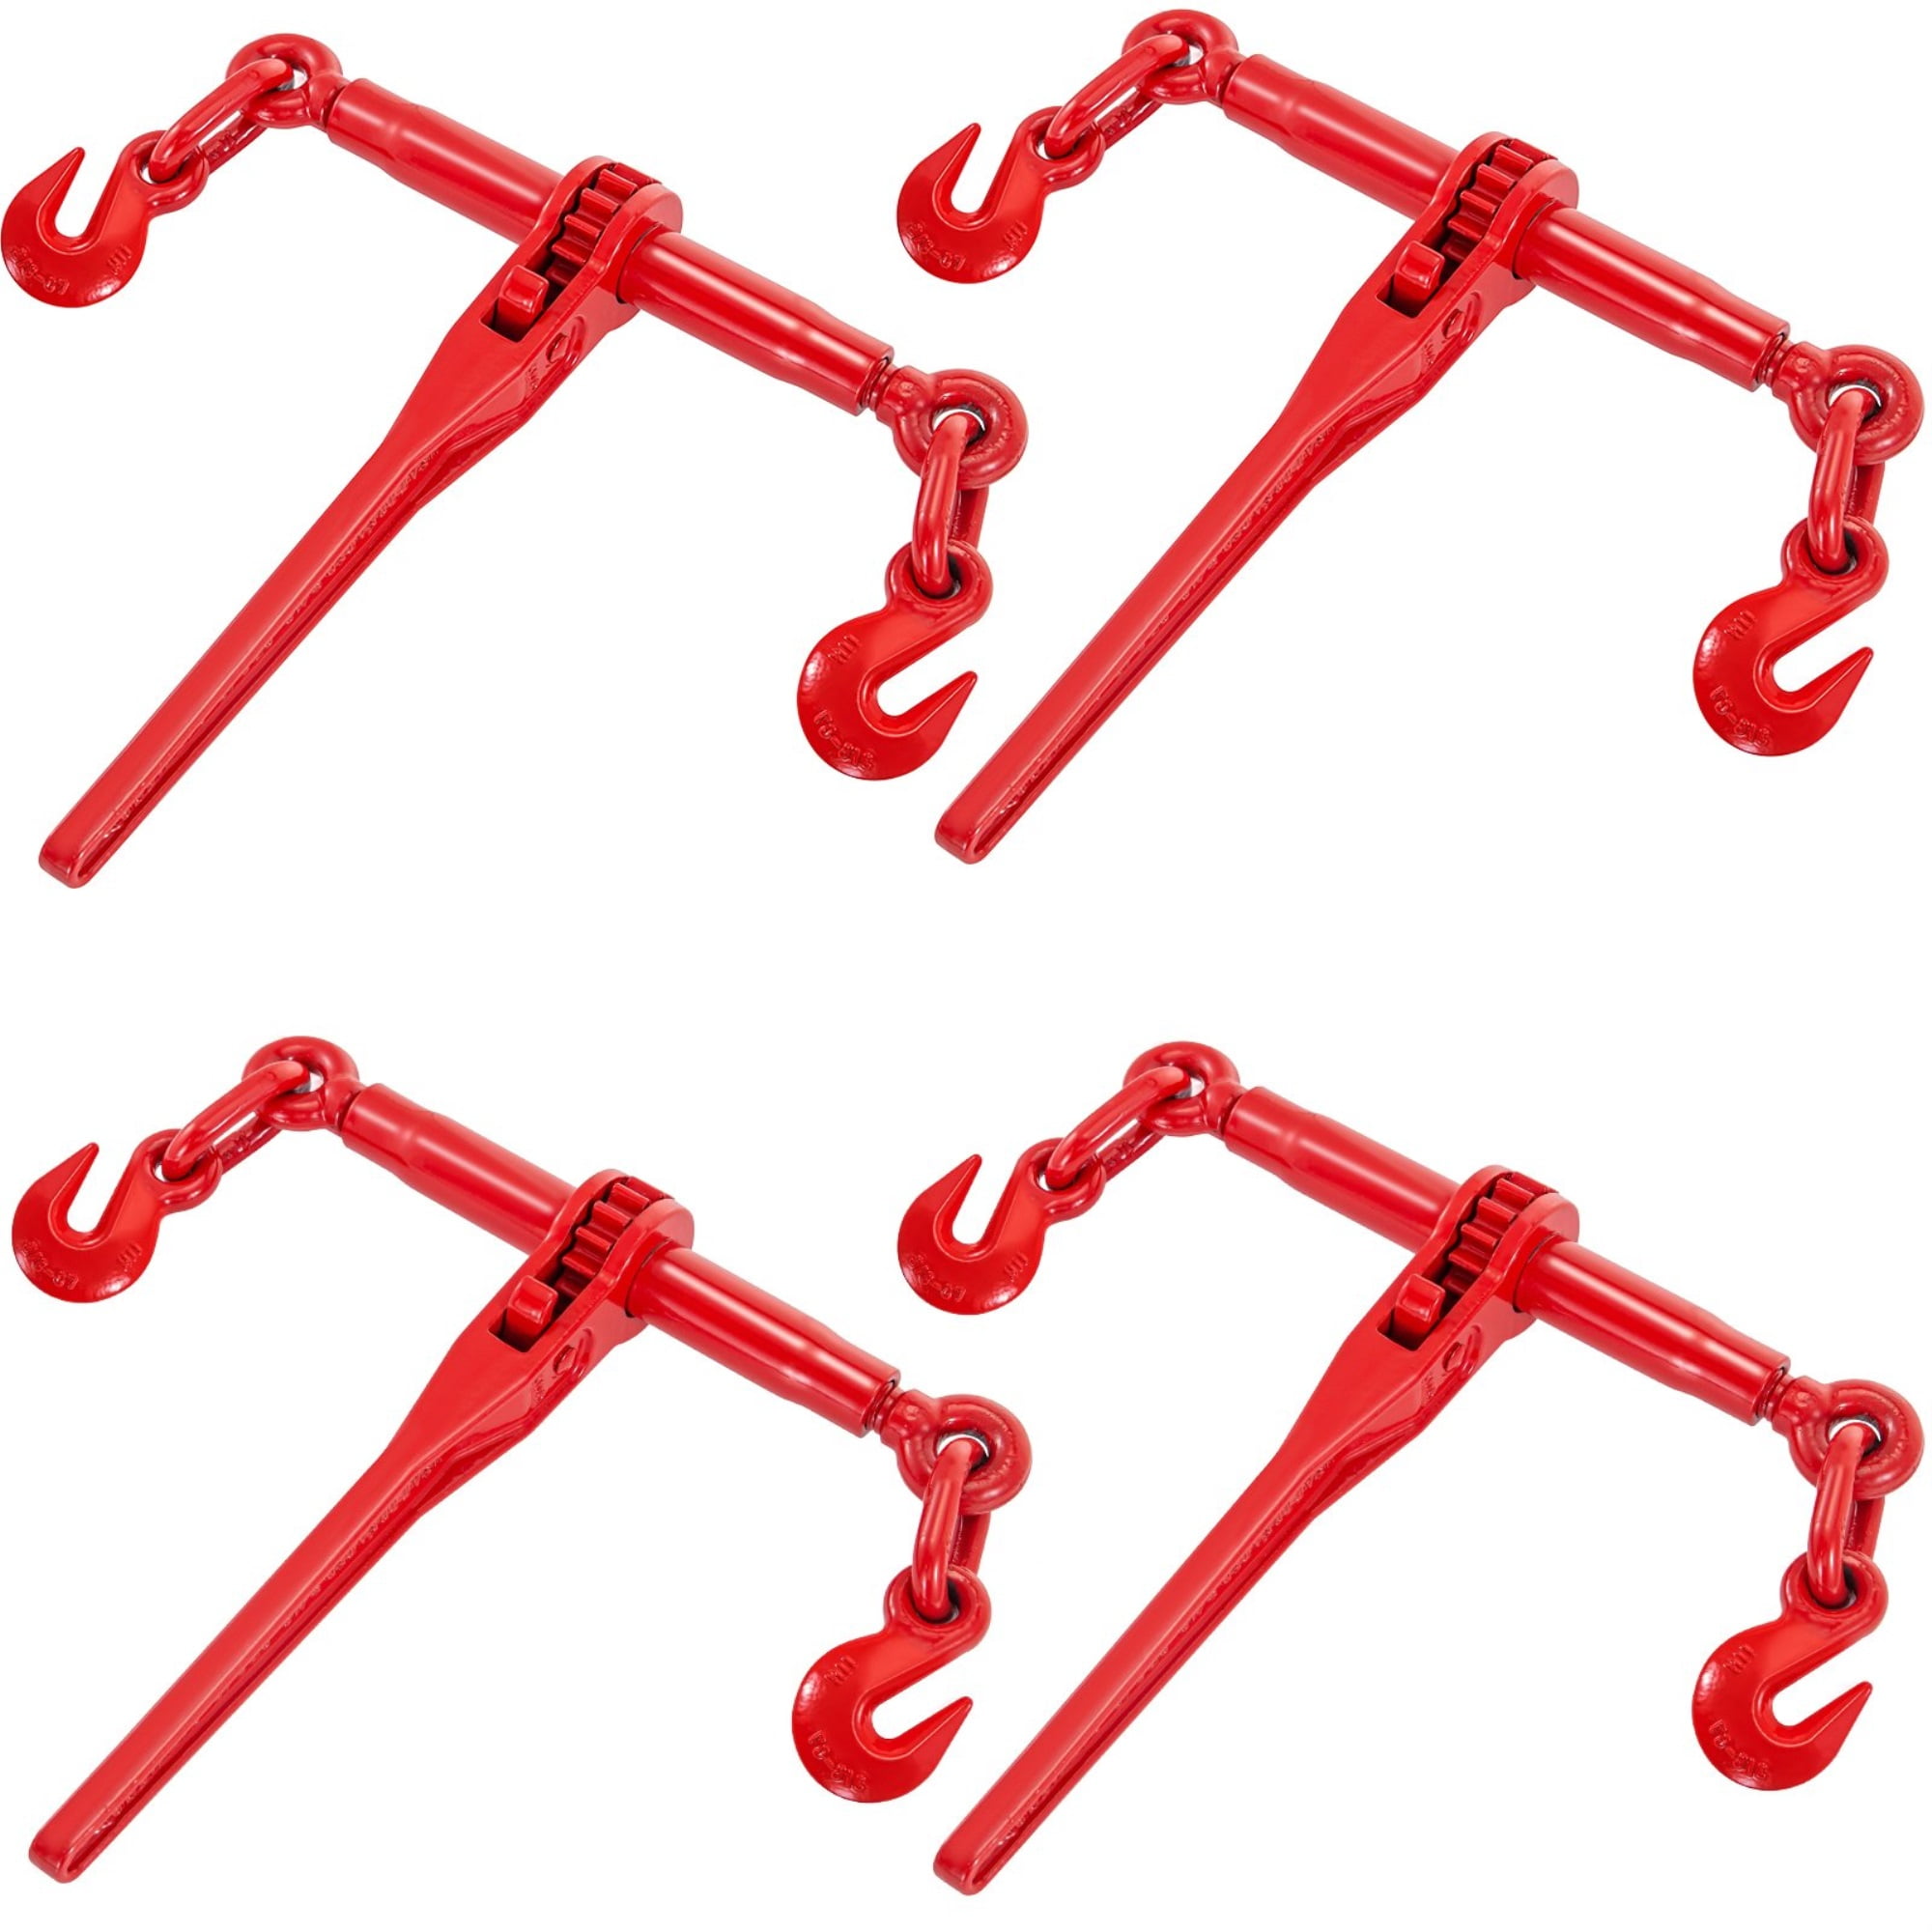 Load Binder Ratchet Type 3/8" Tool Shop Boomer Chain Tie Equipment Down Rigging 